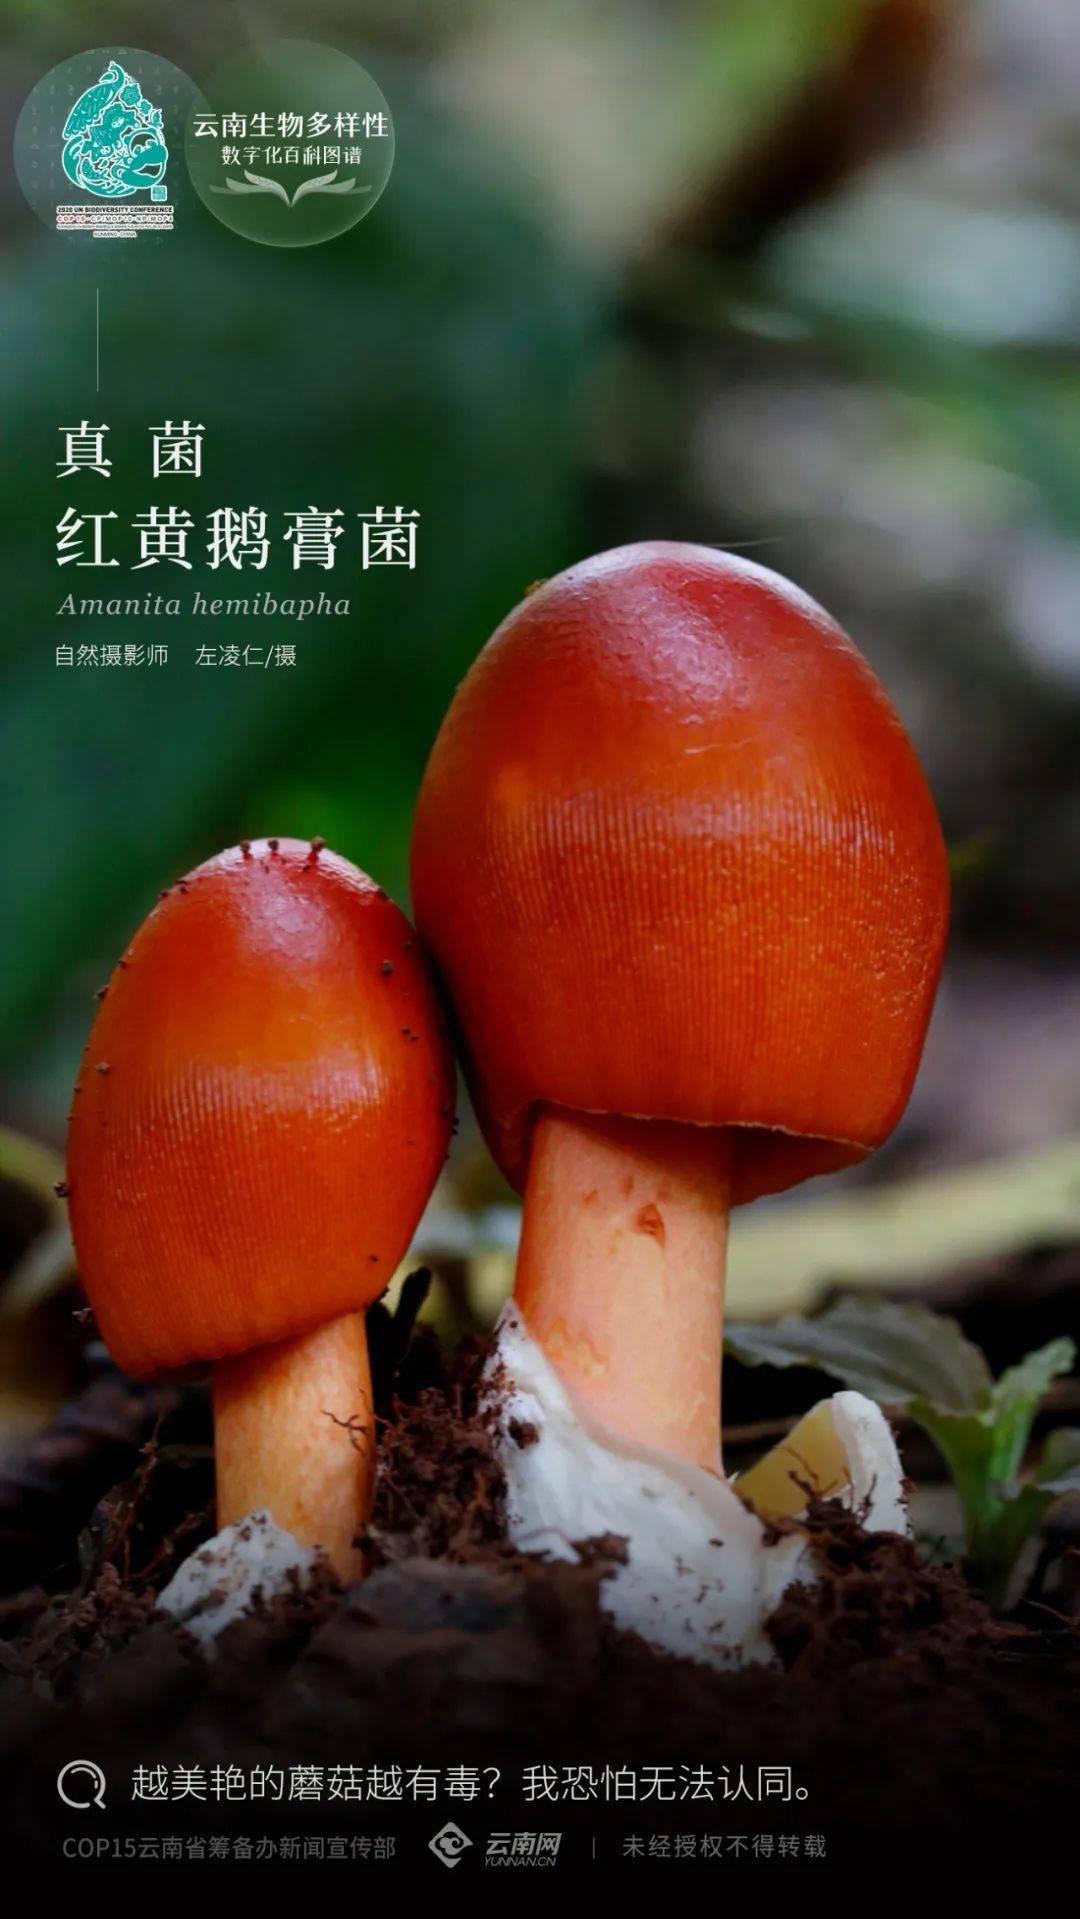 amanita hemibapha 红黄鹅膏菌,隶属于担子菌门,蘑菇纲,蘑菇目,鹅膏